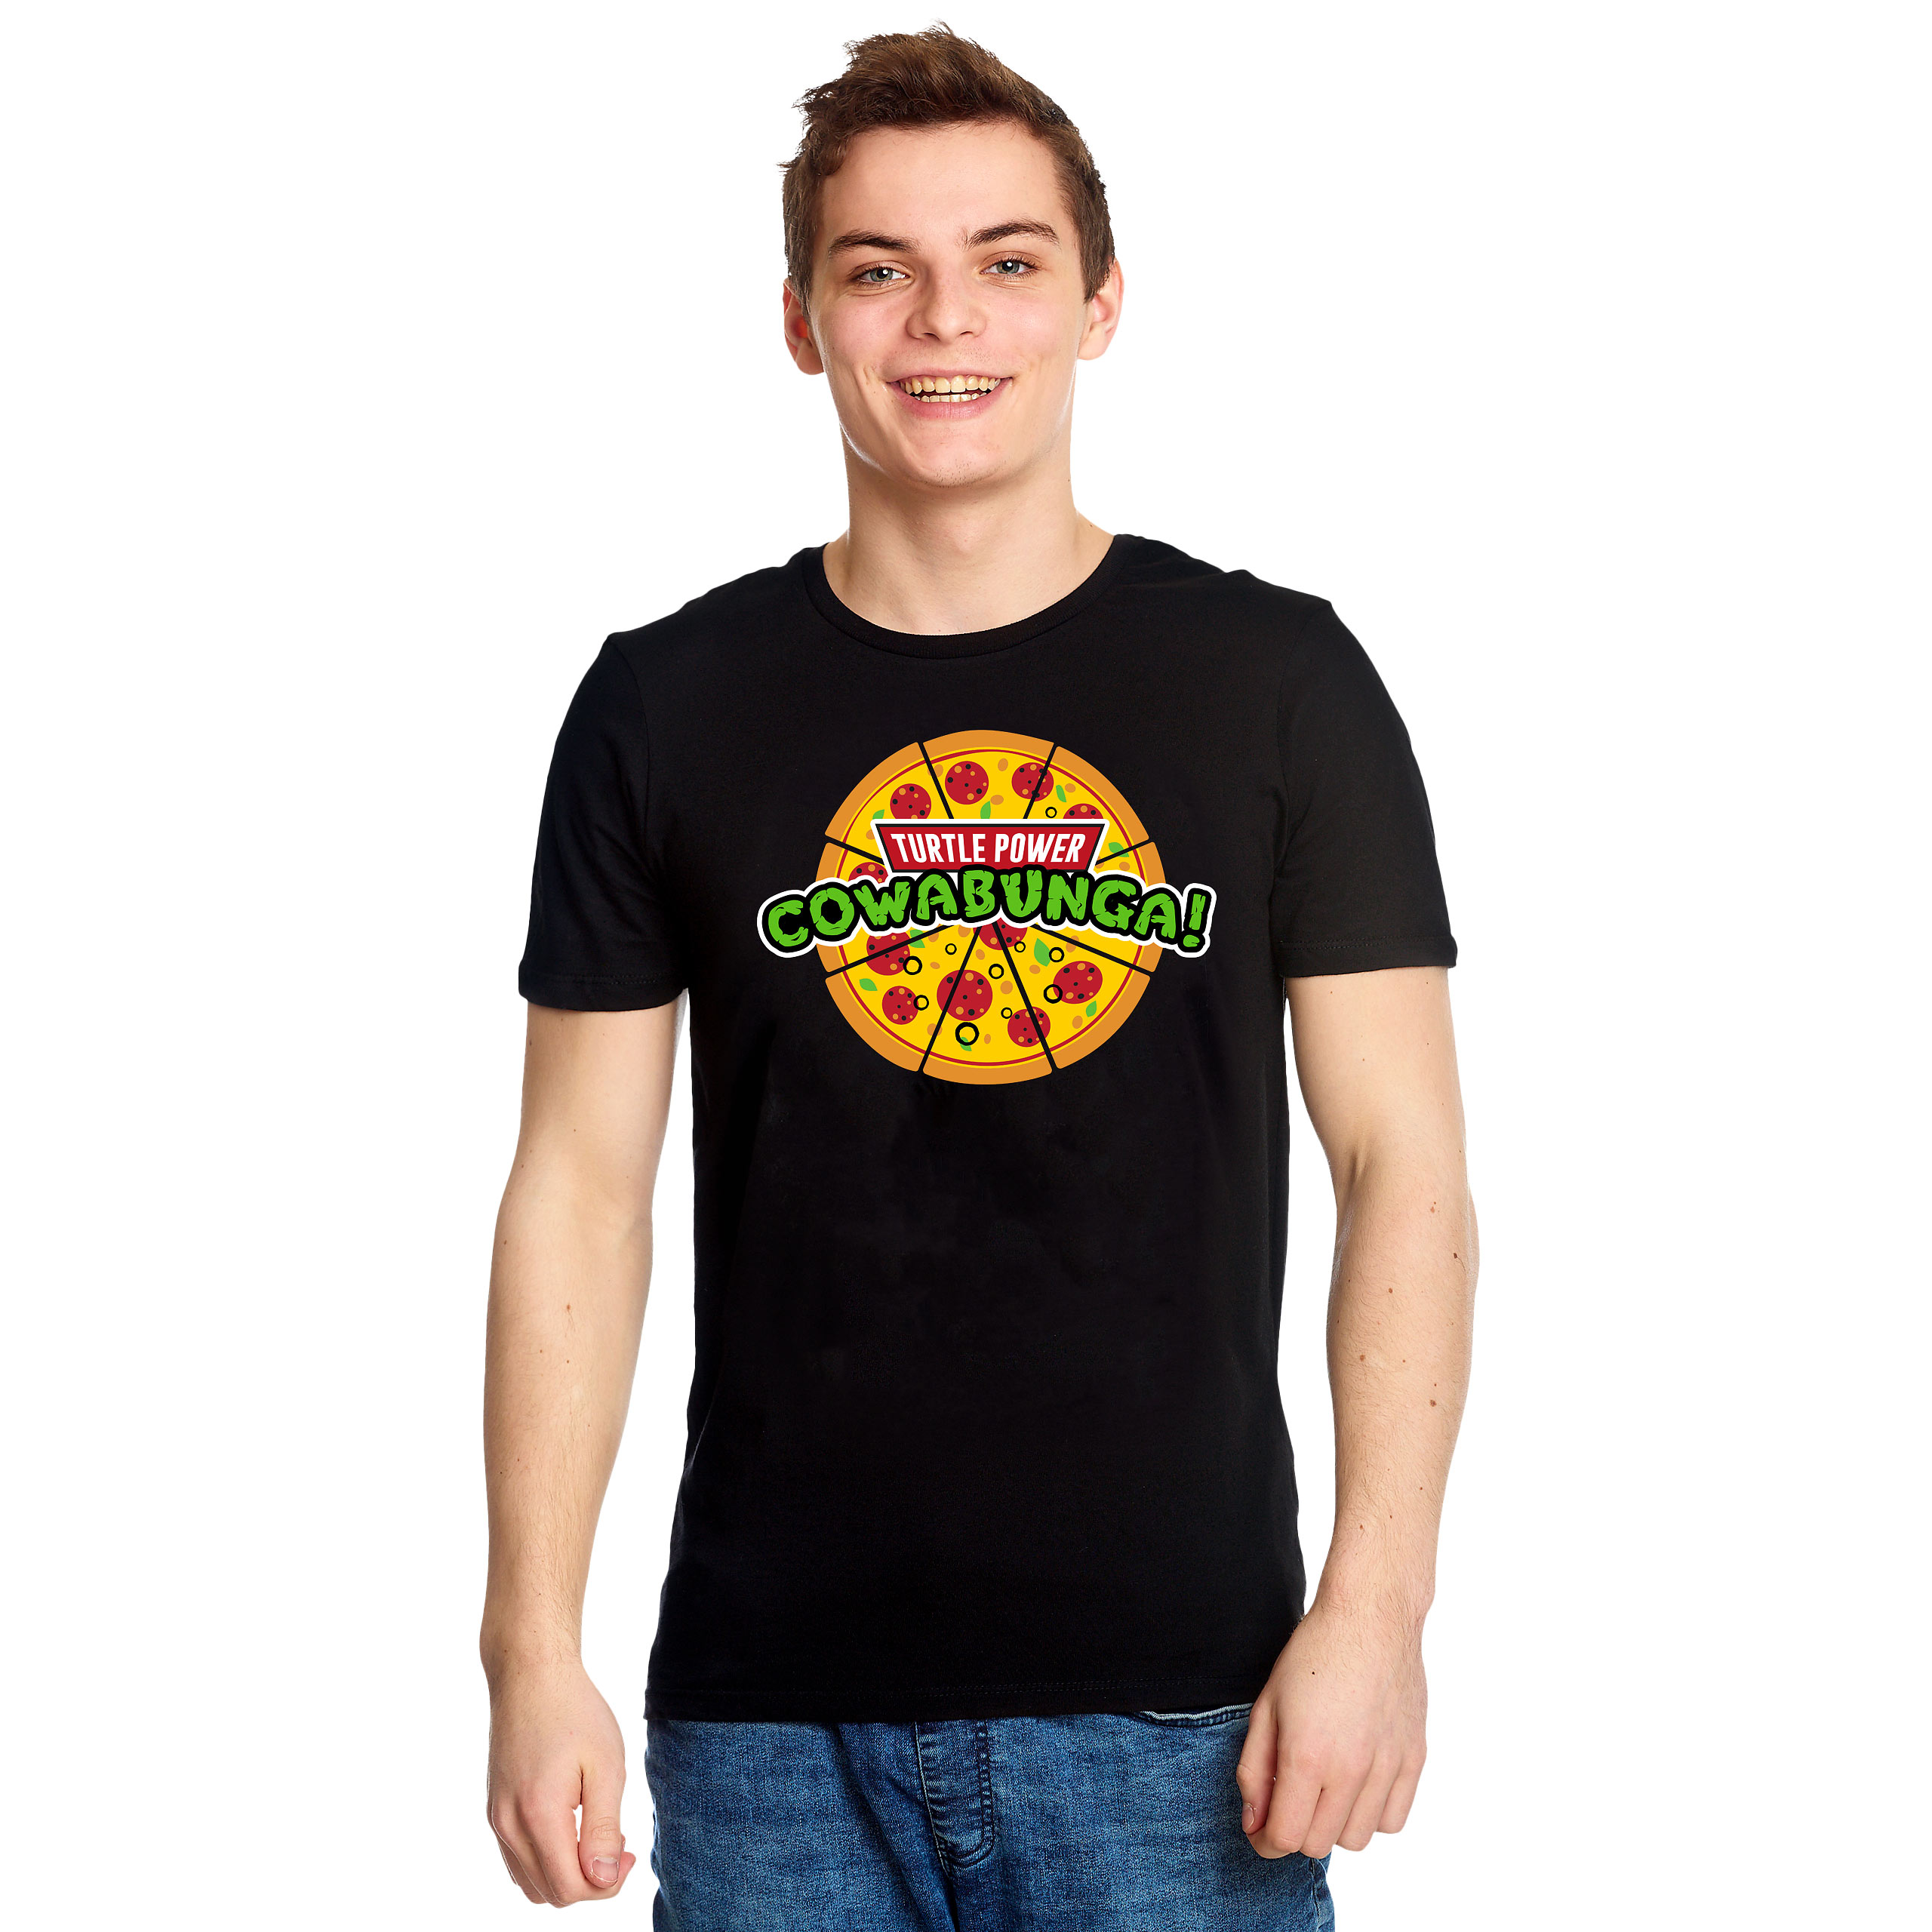 Cowabunga Pizza T-Shirt für Ninja Turtles Fans schwarz